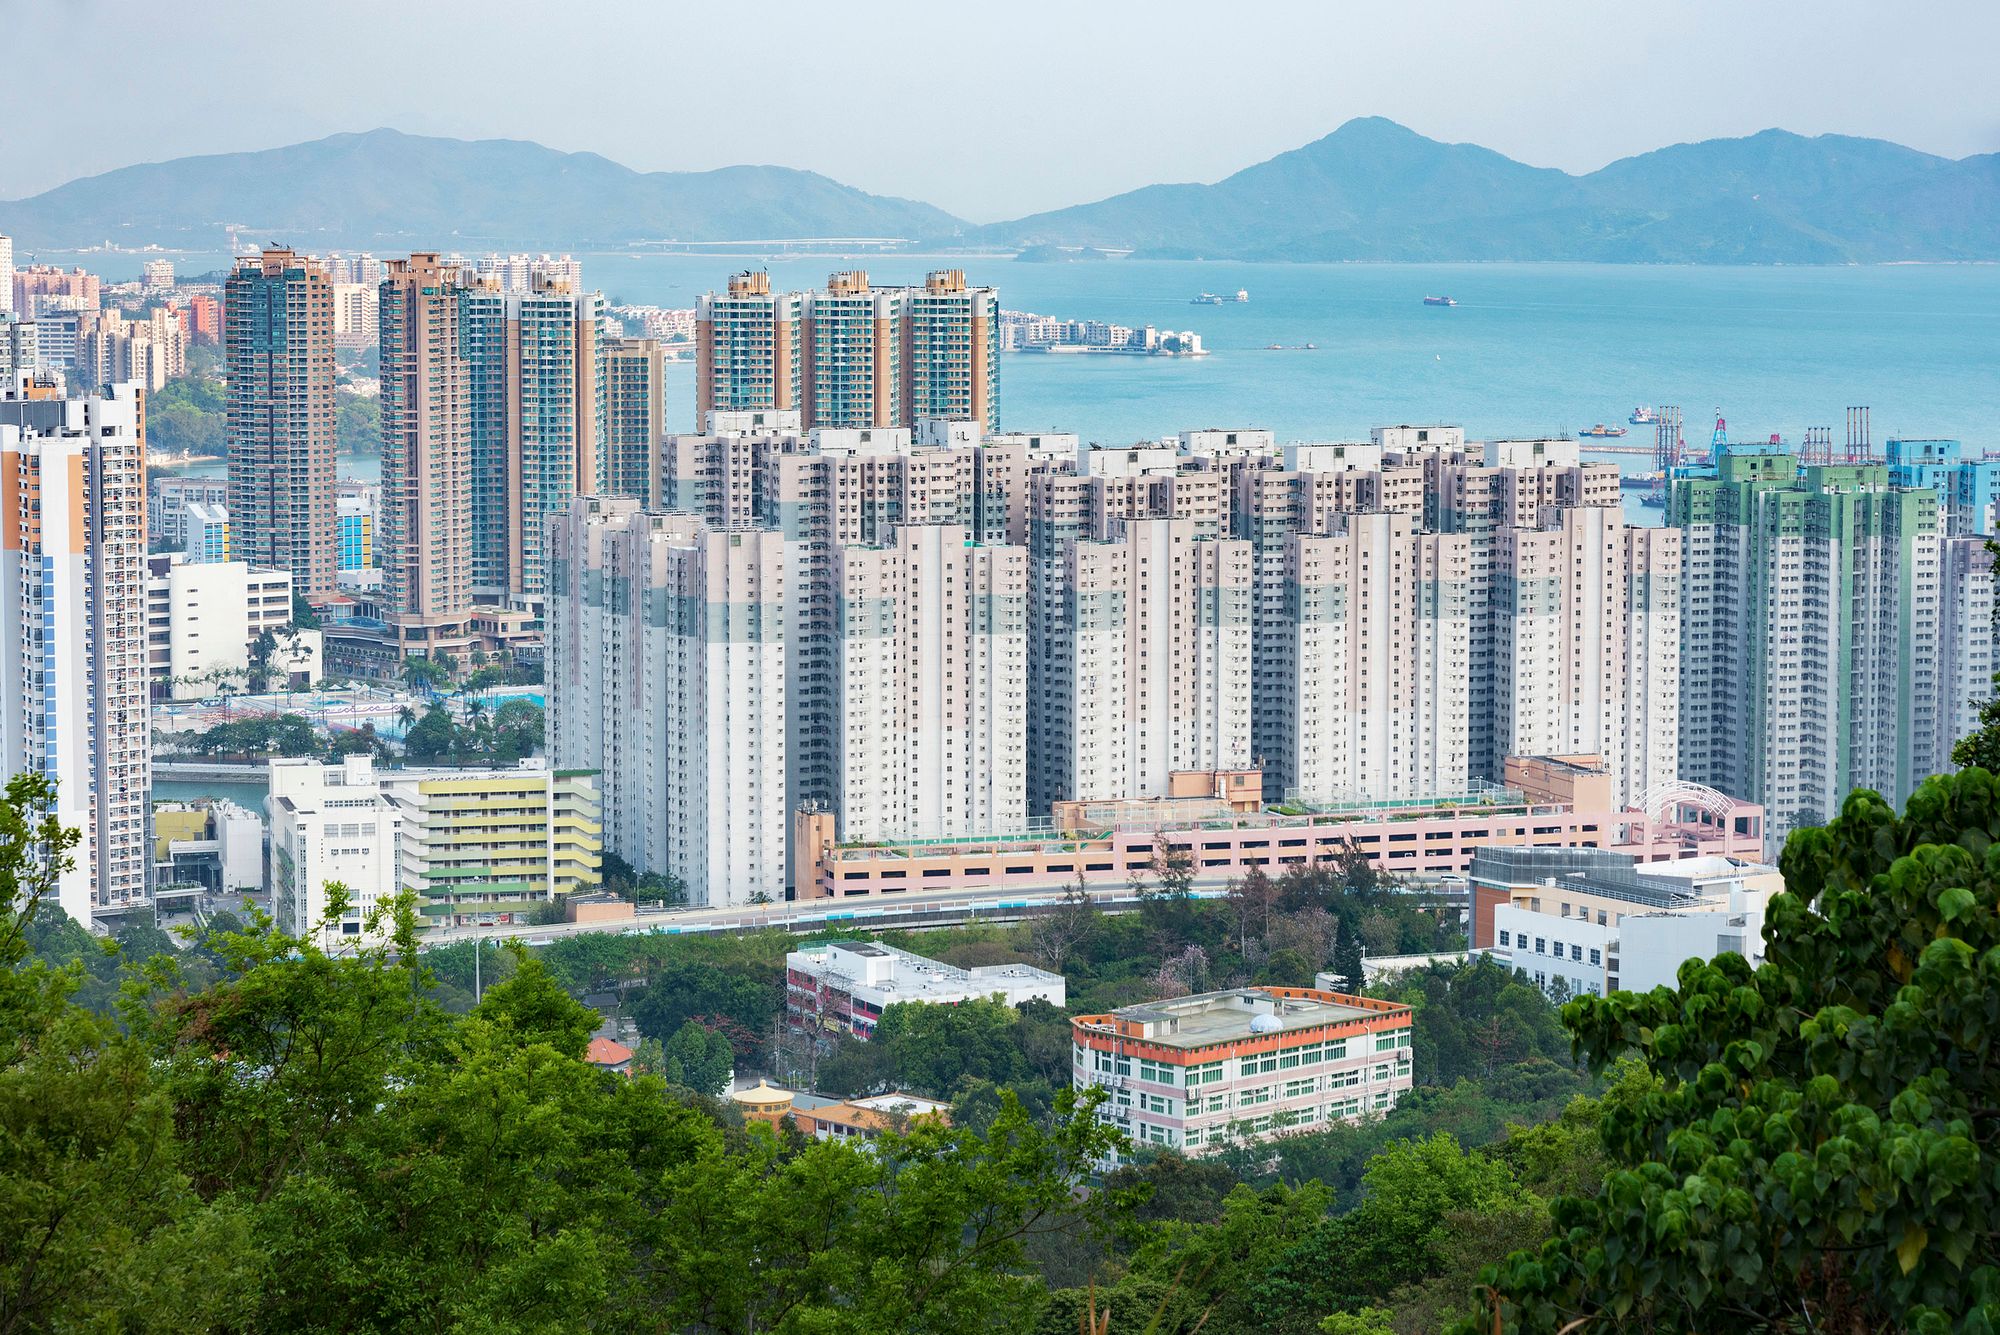 Time to take a look at Hong Kong’s real estate